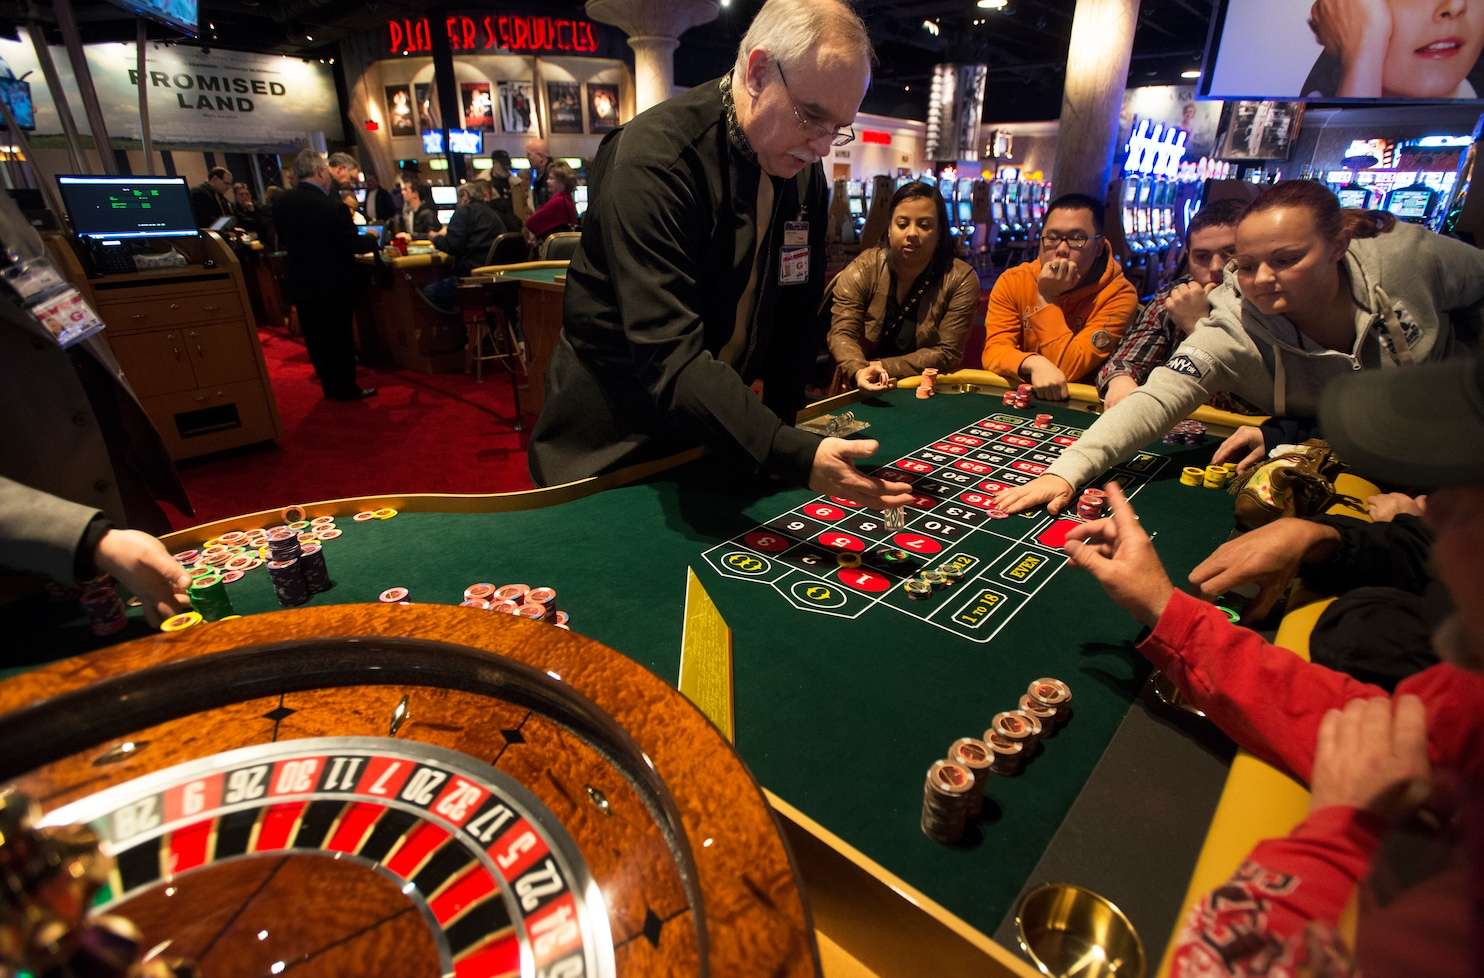 Does Trump Las Vegas Have A Casino